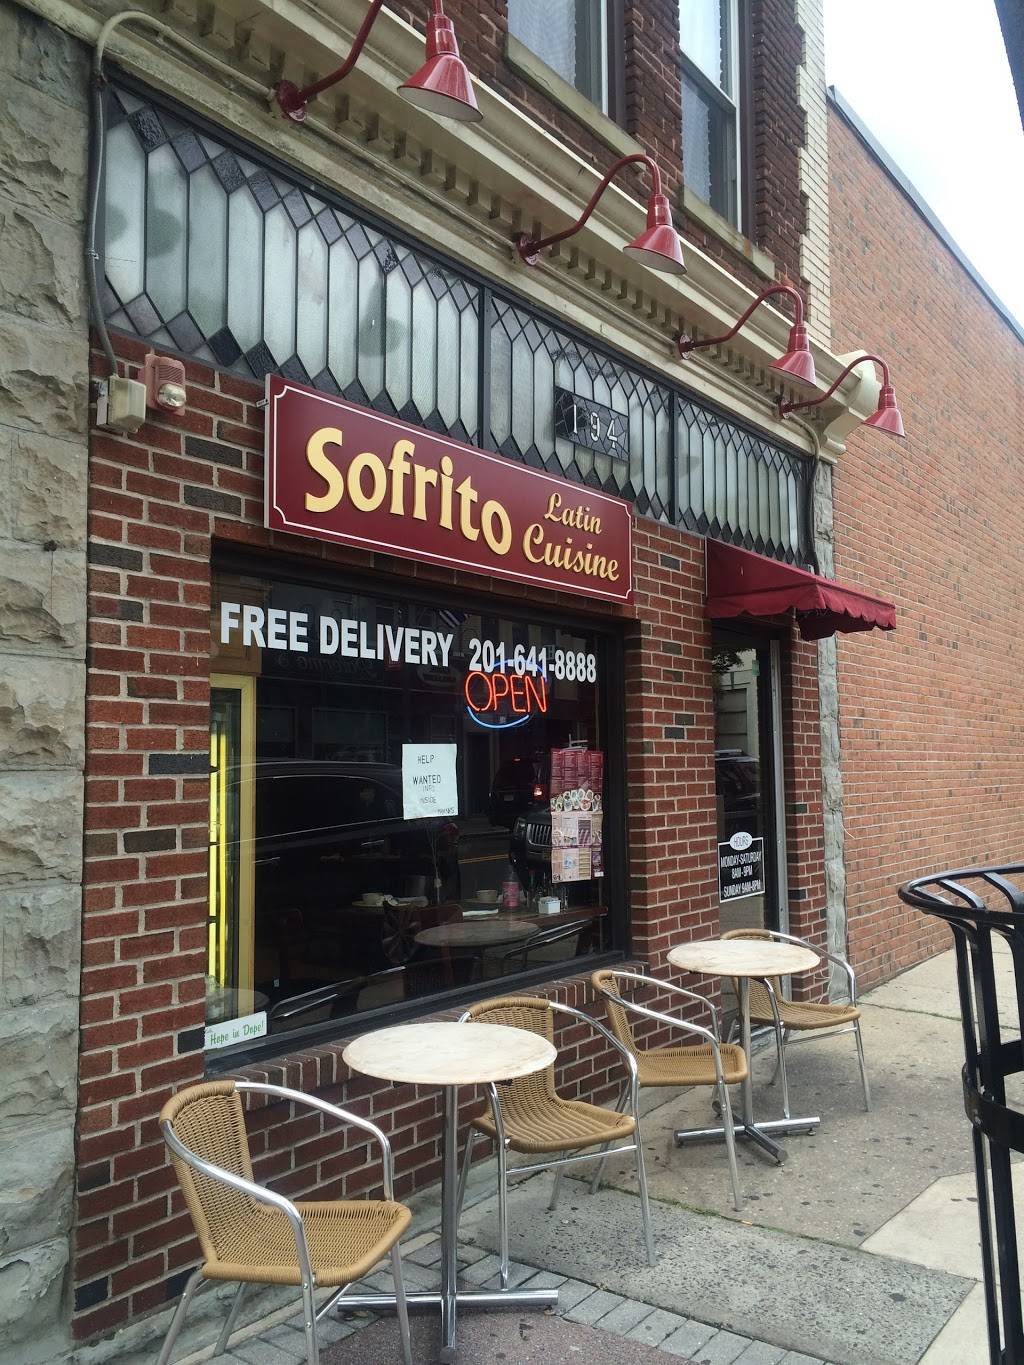 Sofrito | restaurant | 194 Main St, Ridgefield Park, NJ 07660, USA | 2016418888 OR +1 201-641-8888